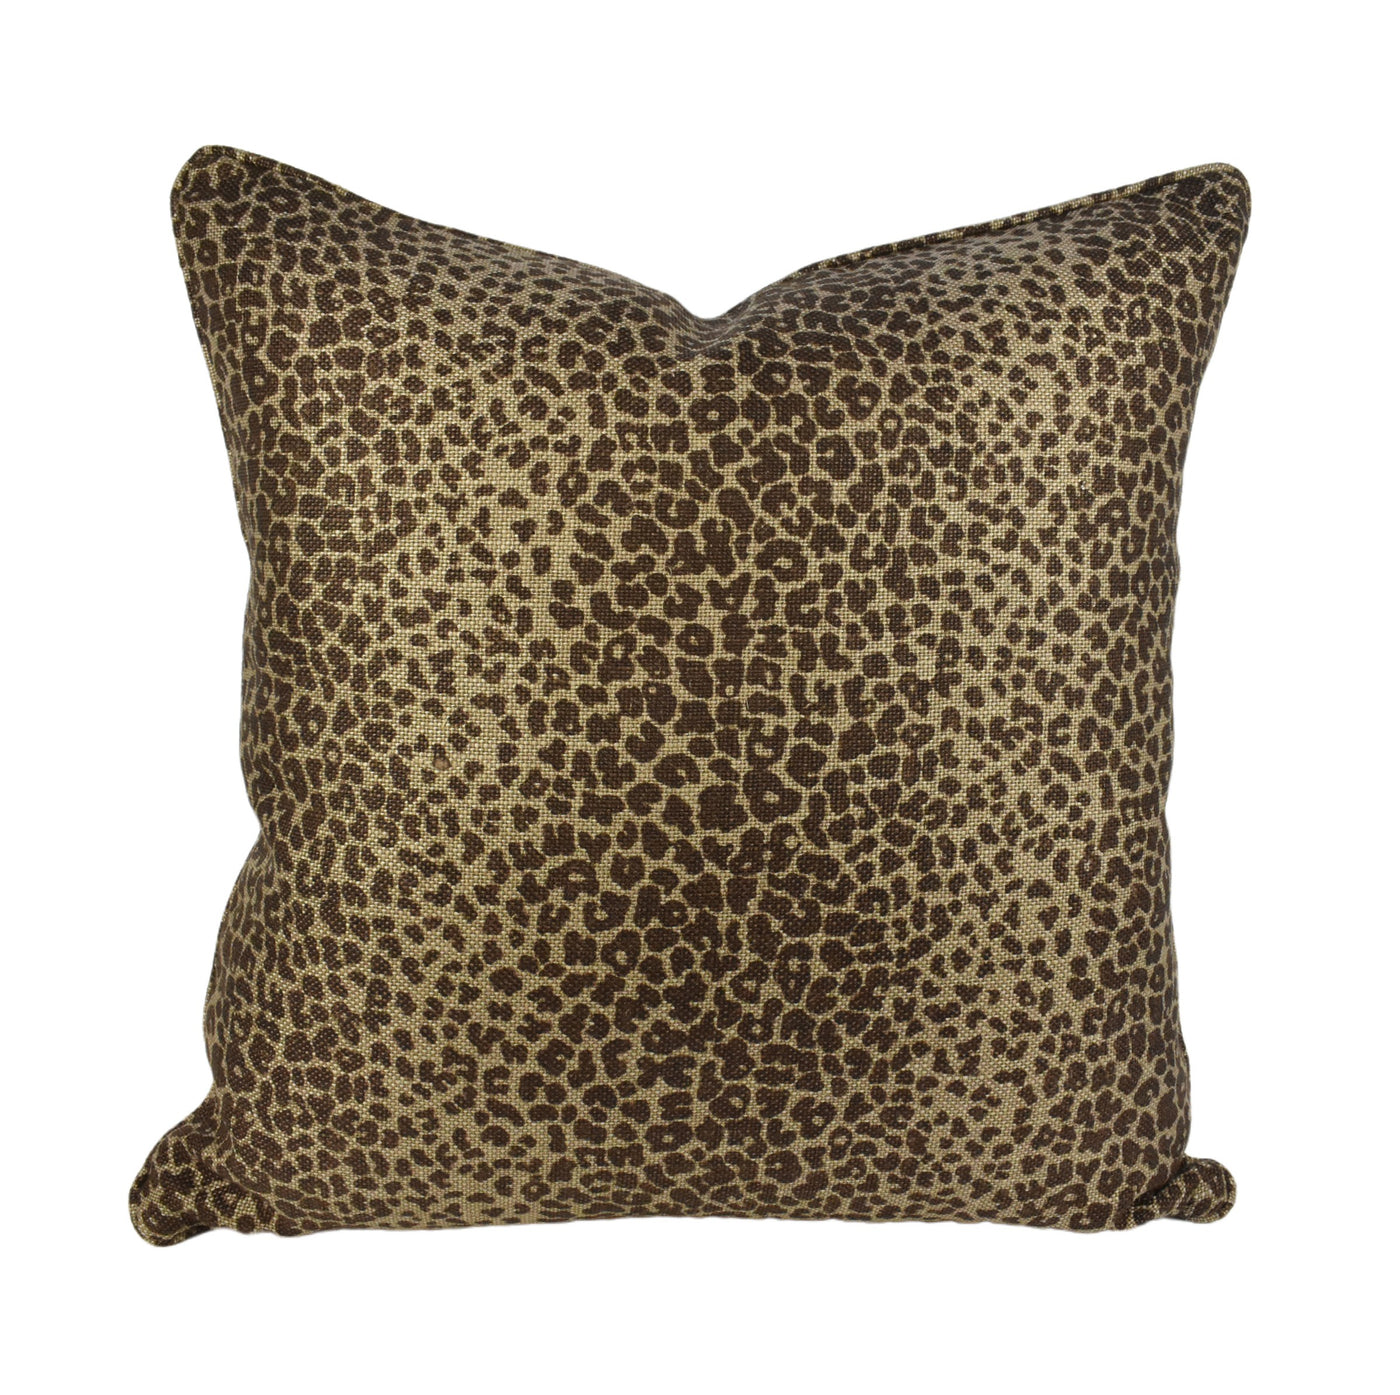 Chocolate Brown Animal Cushion